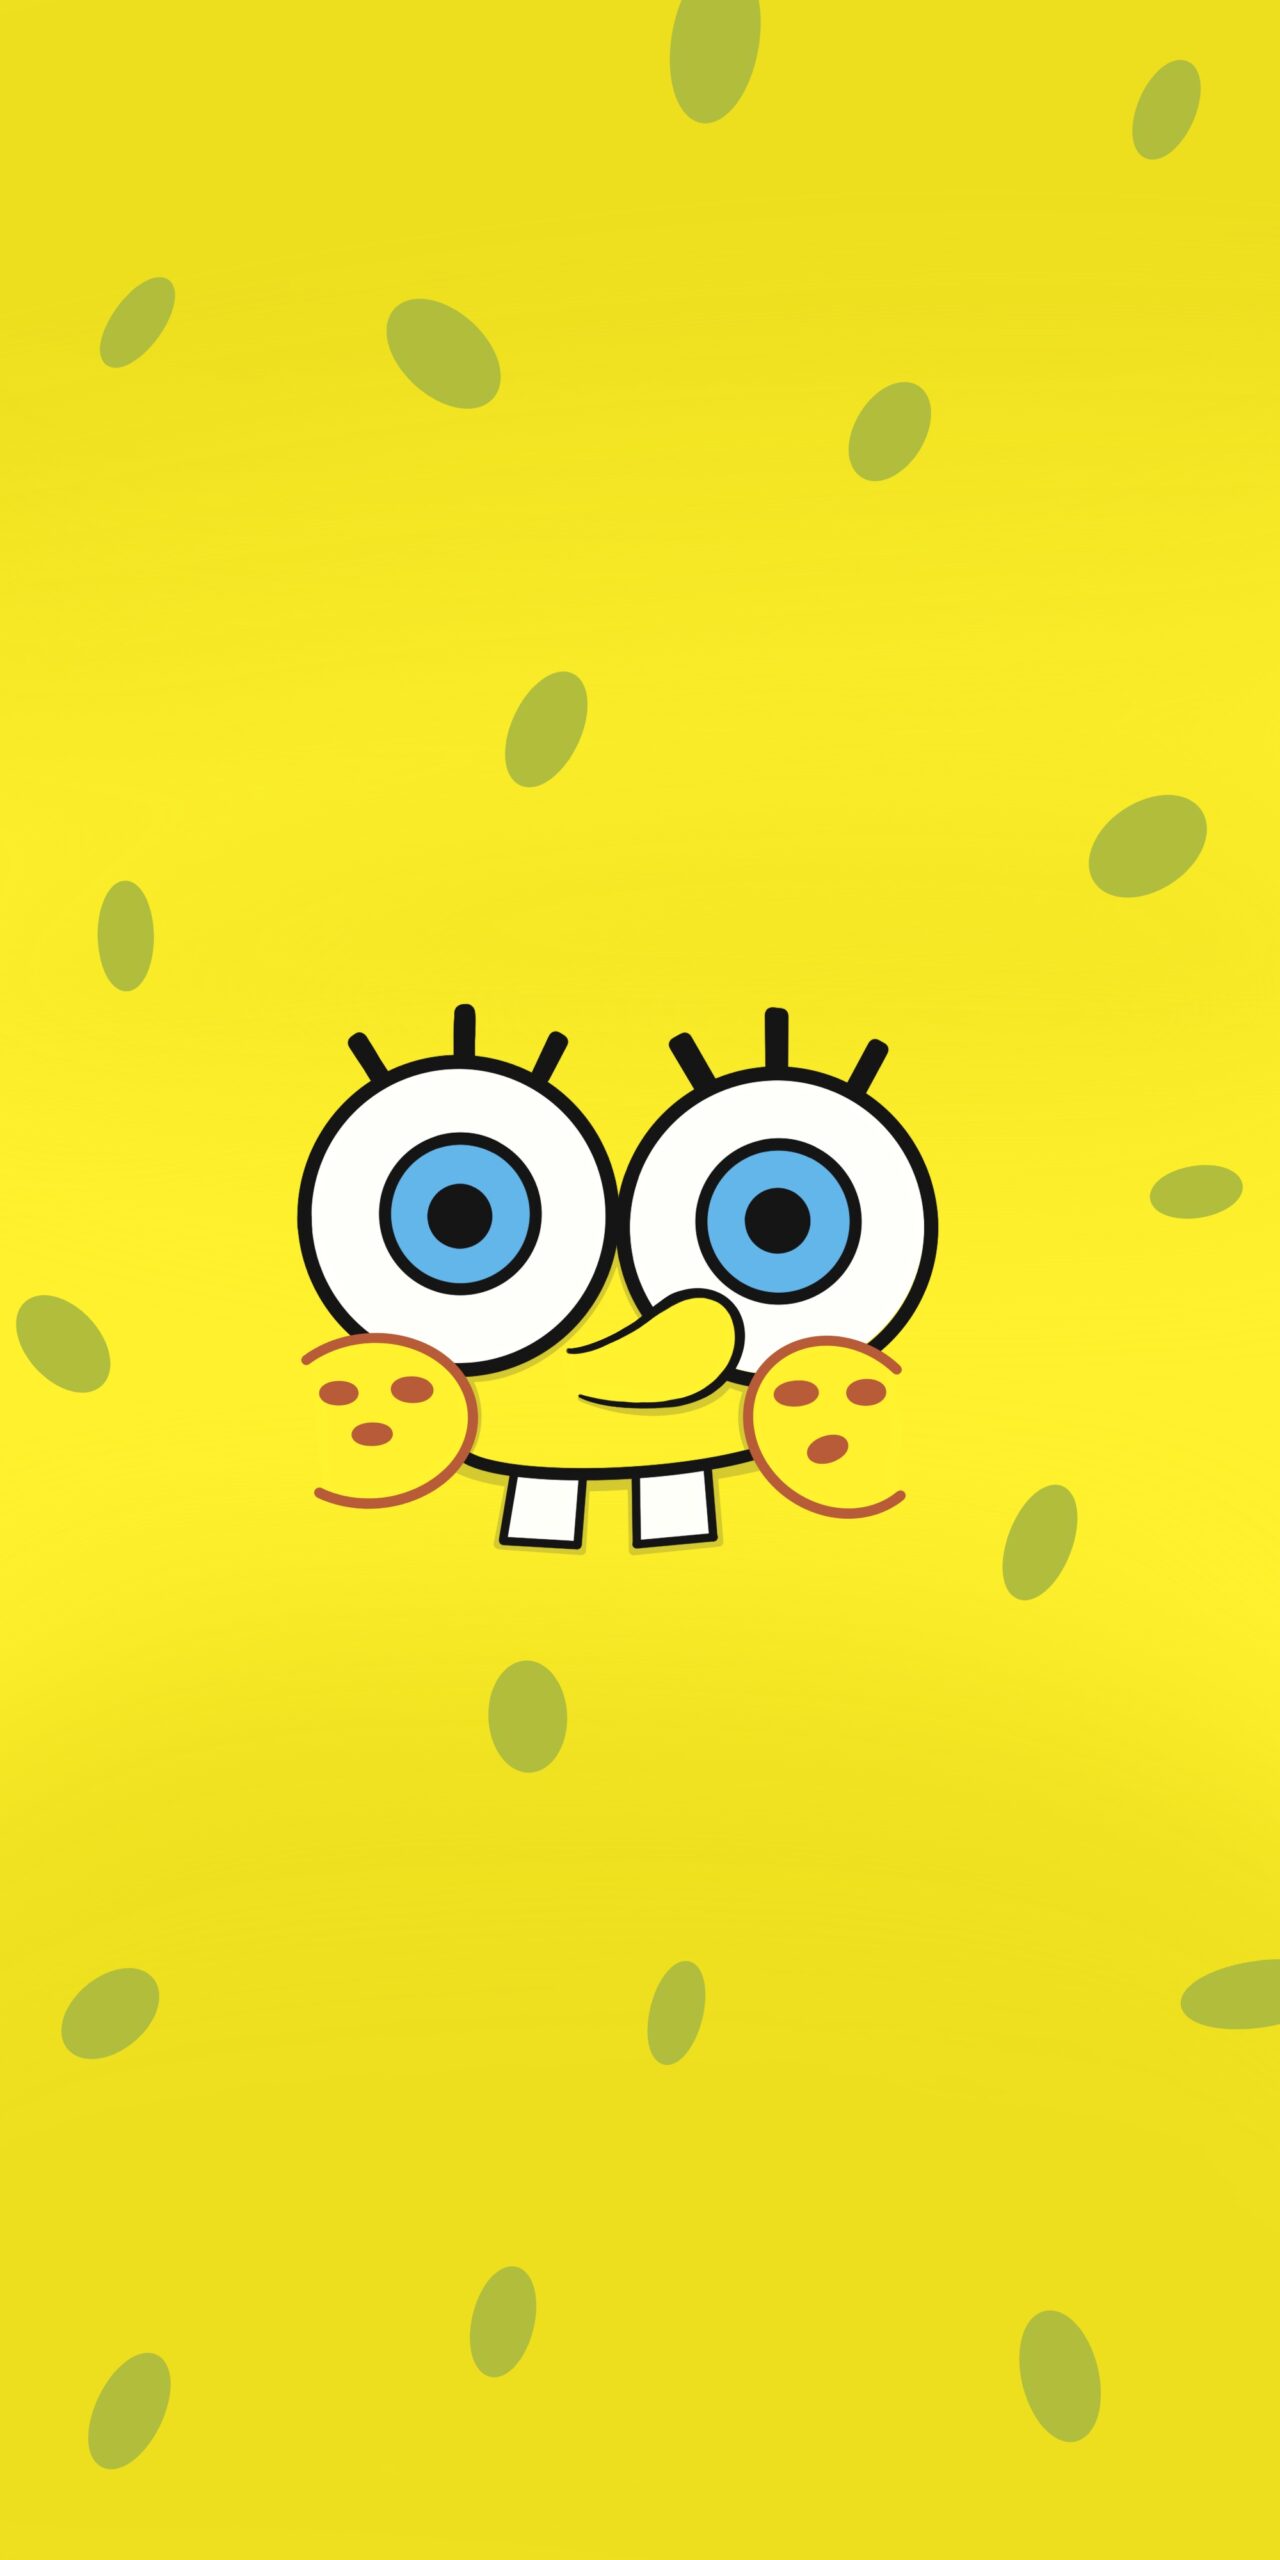 spongebob smiling face wallpaper